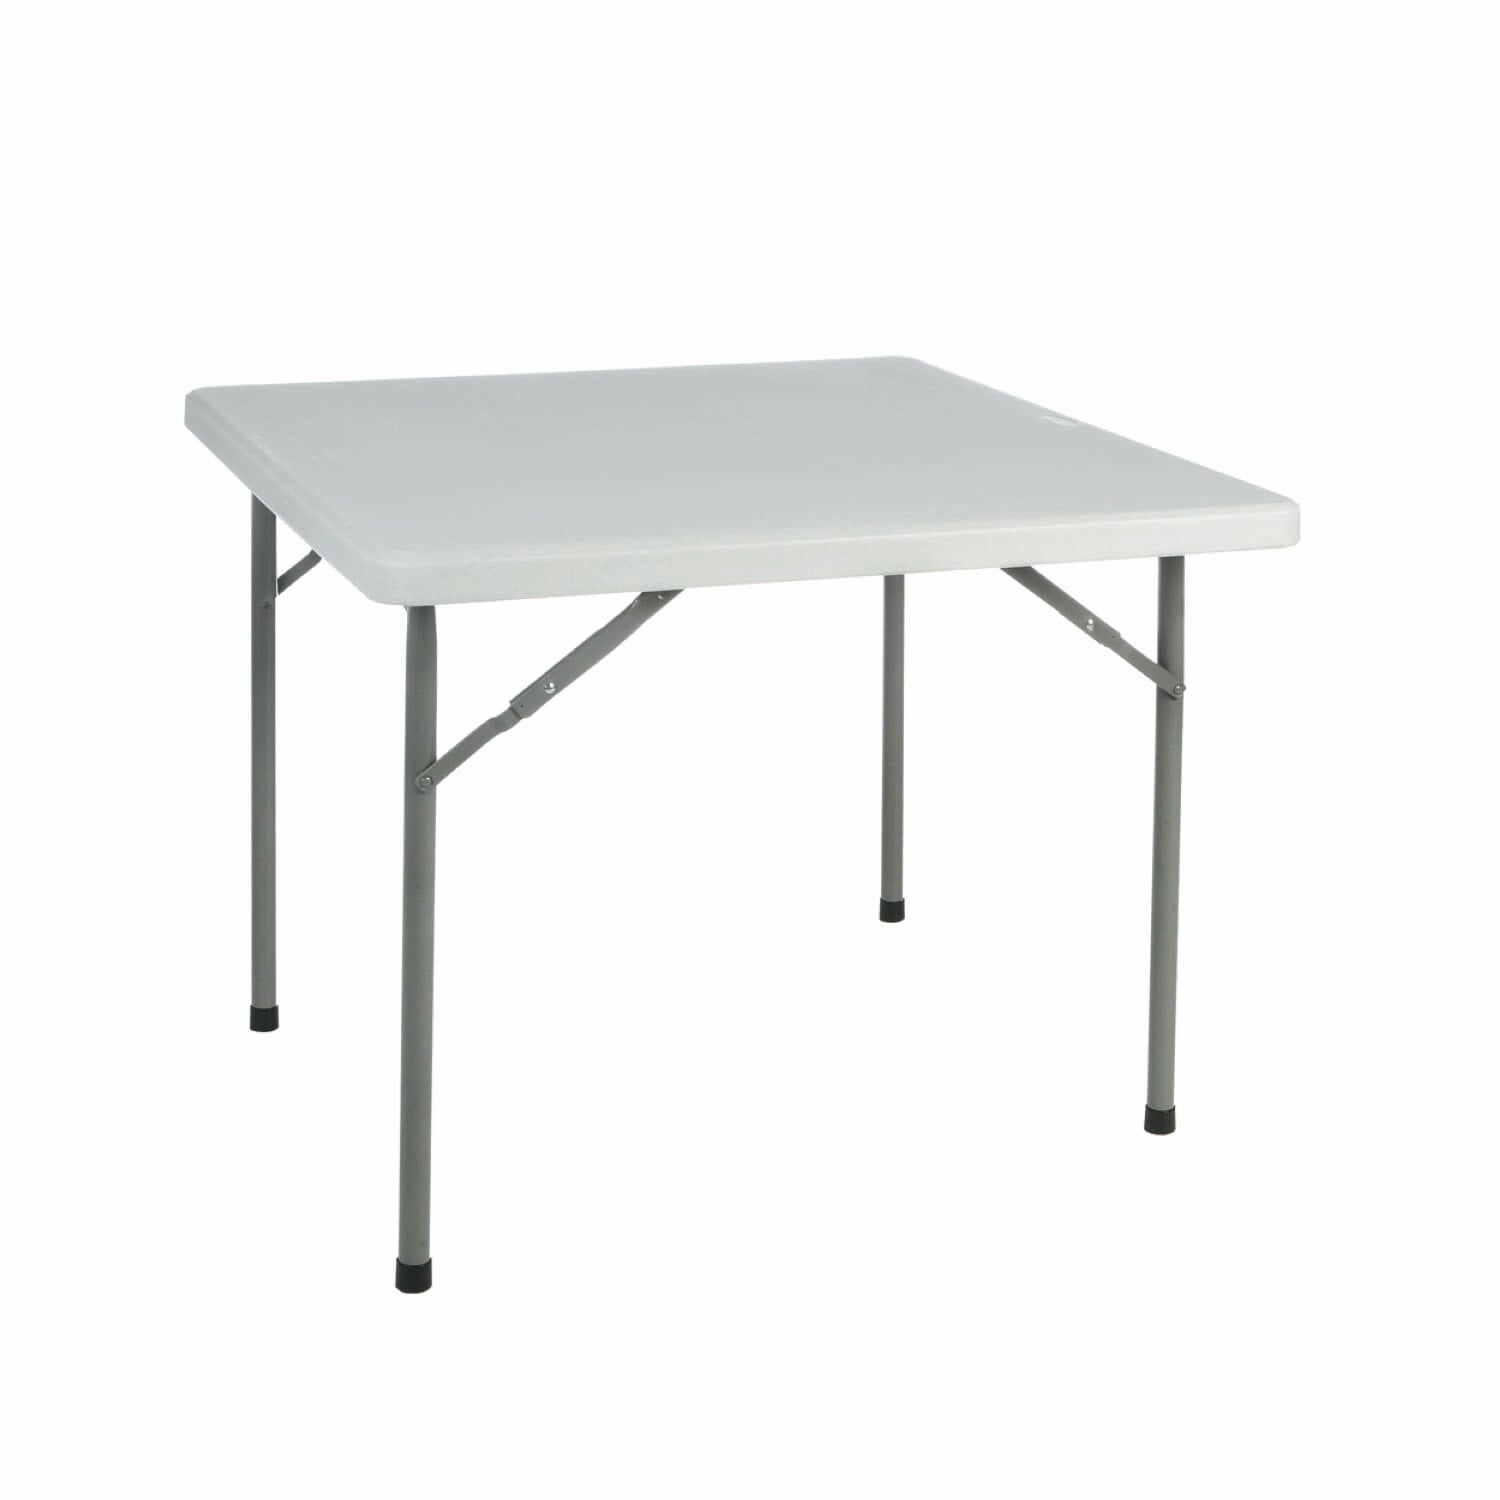 Garbar yago vouwbare tafel 88x88 grijs